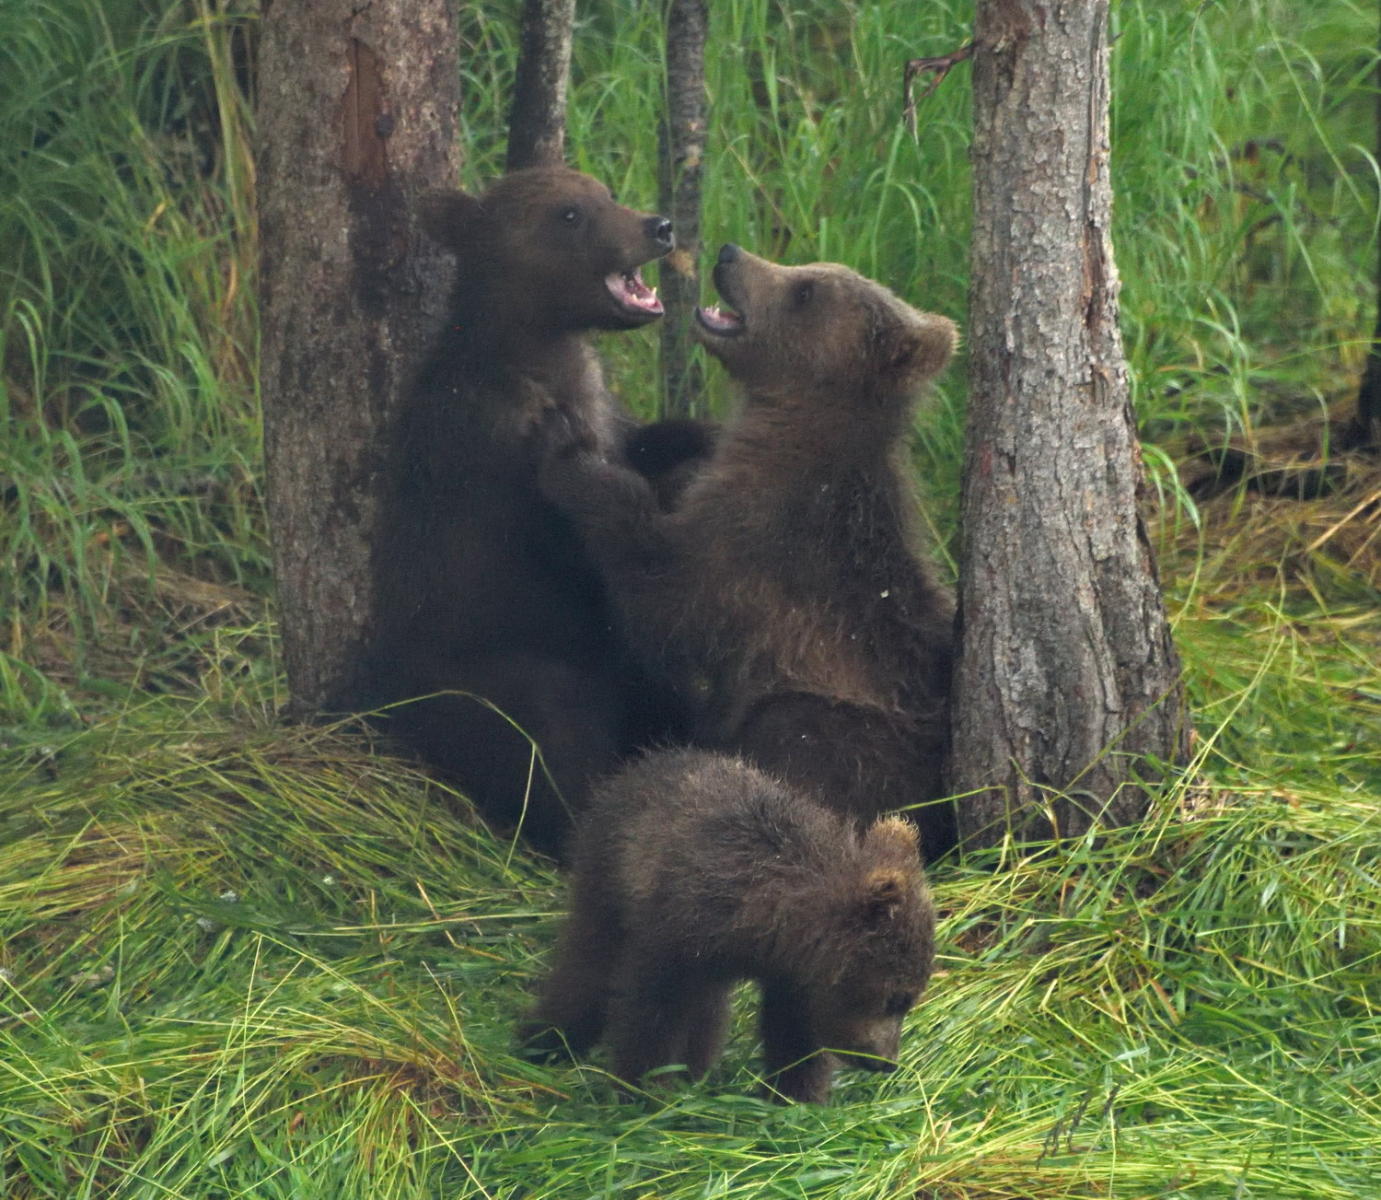 DSC_3462_1A1 - Bear Cubs at Play